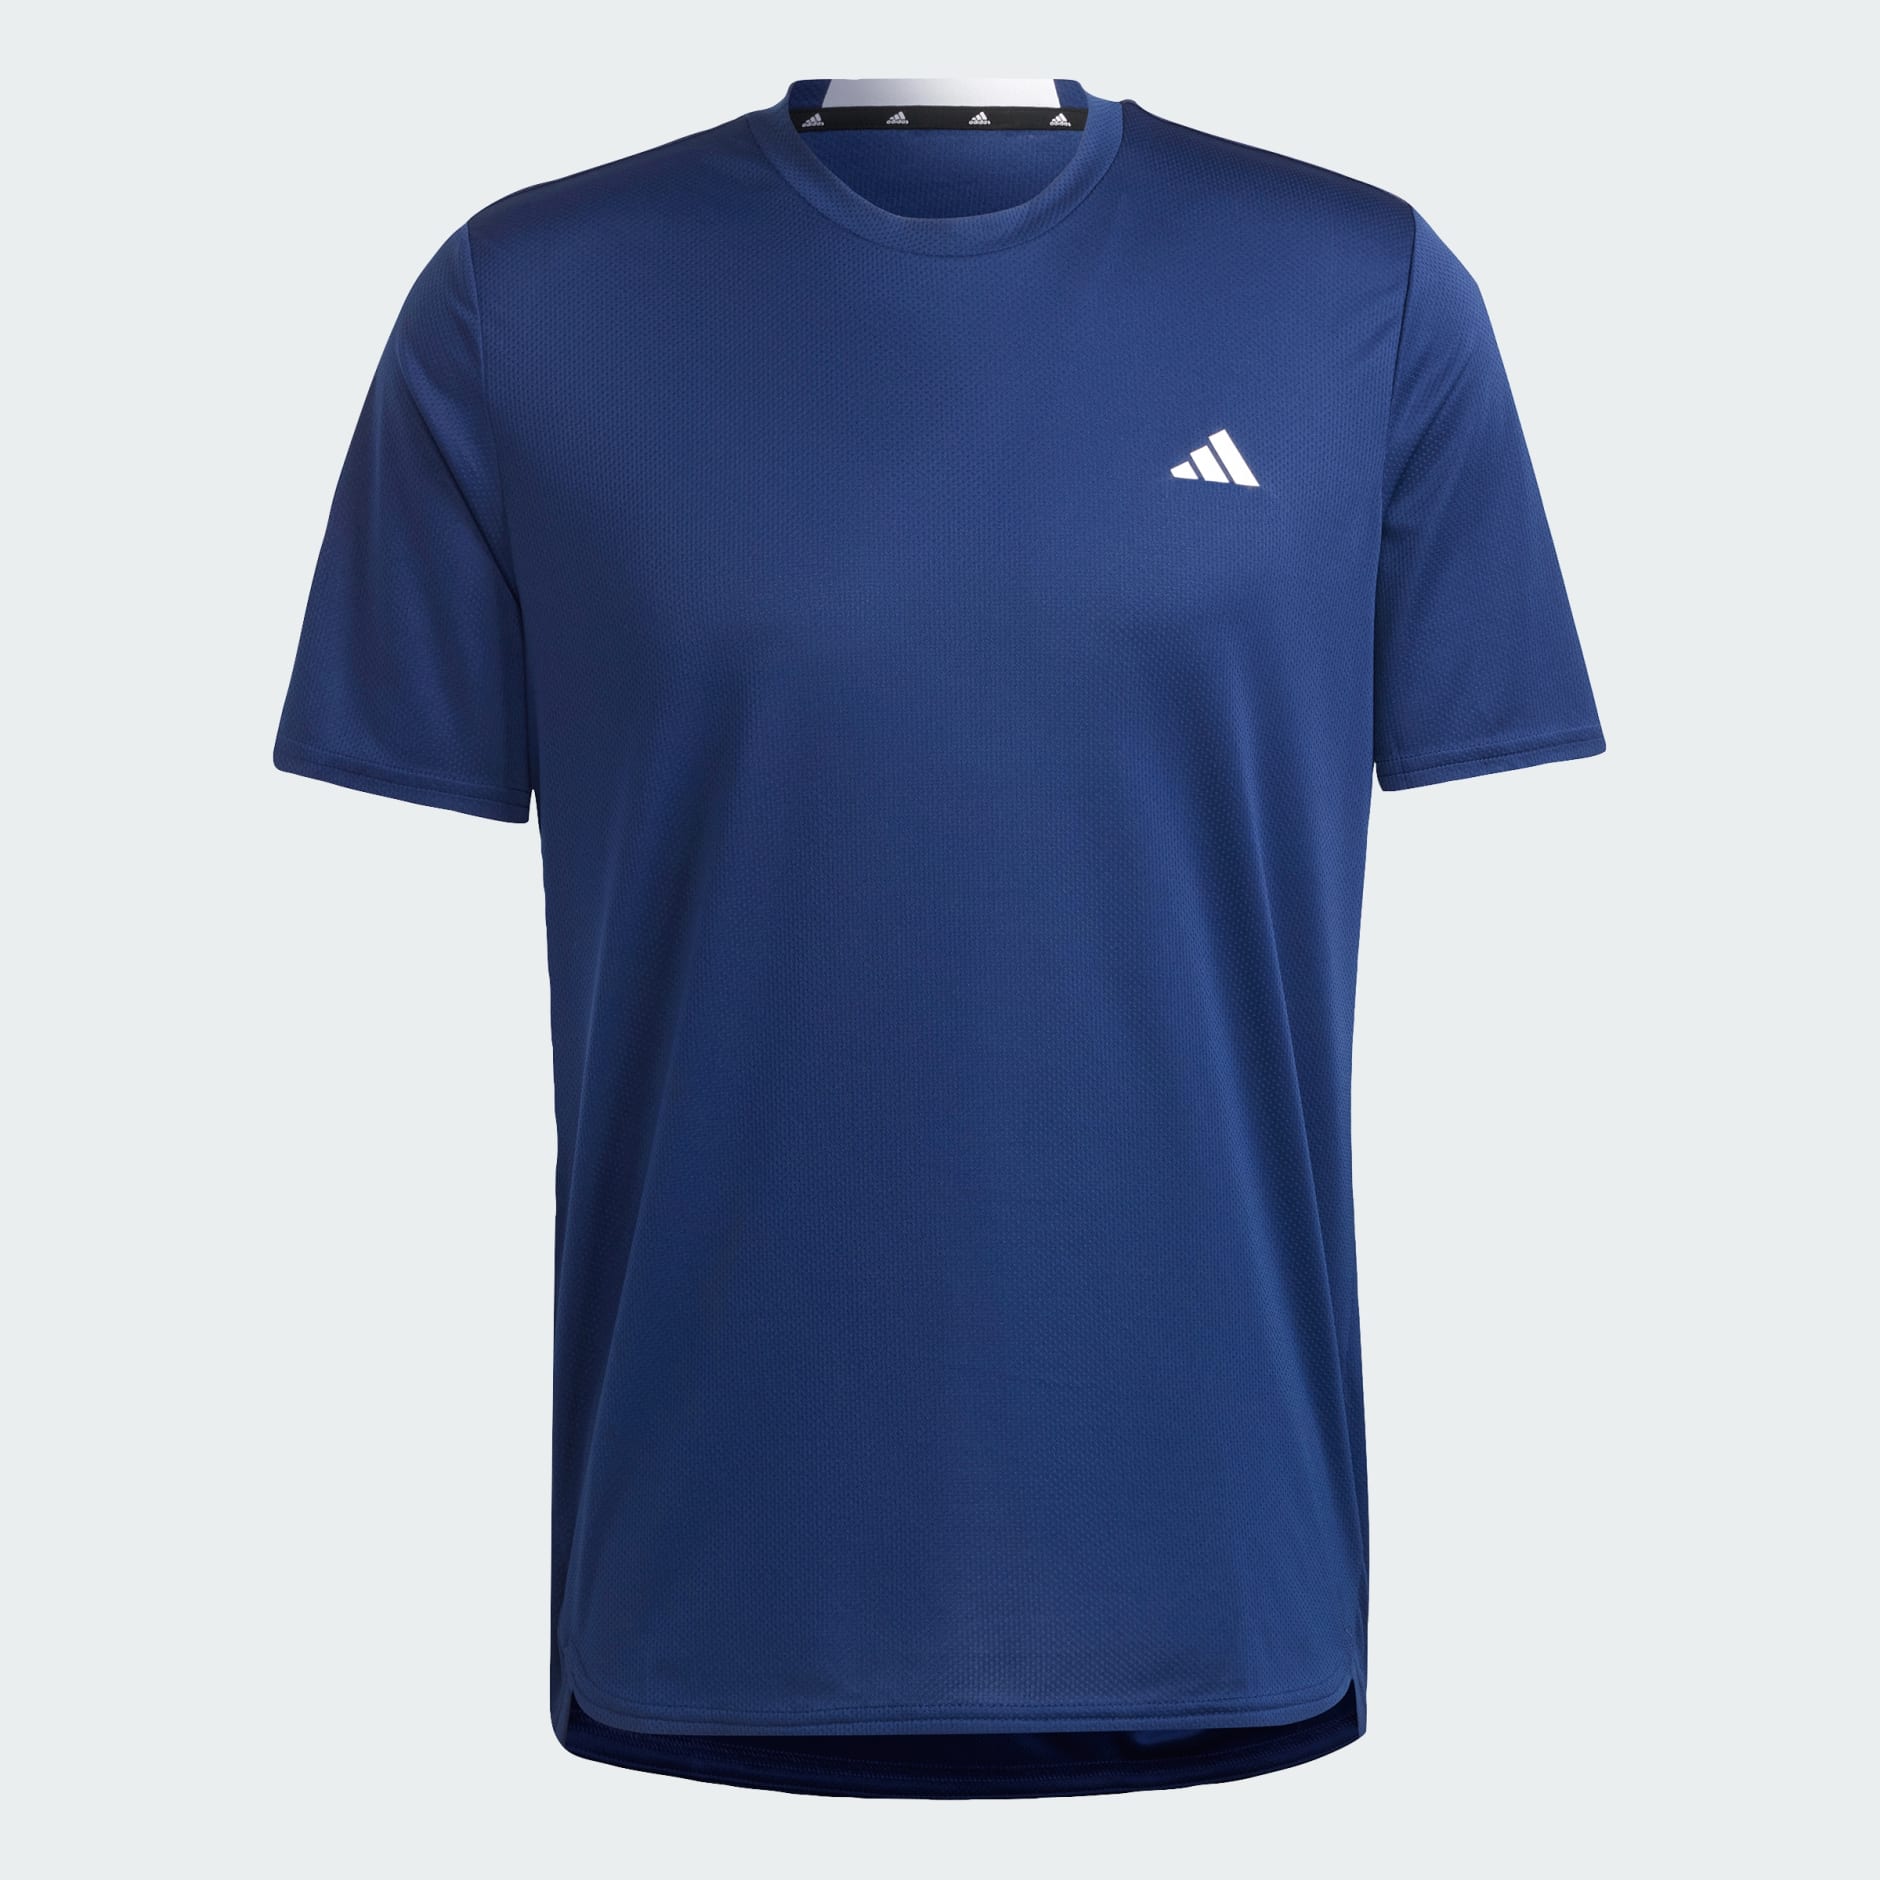 adidas Originals AEROREADY Sport Tee Vert - Vêtements Débardeurs / T-shirts  sans manche Homme 40,99 €